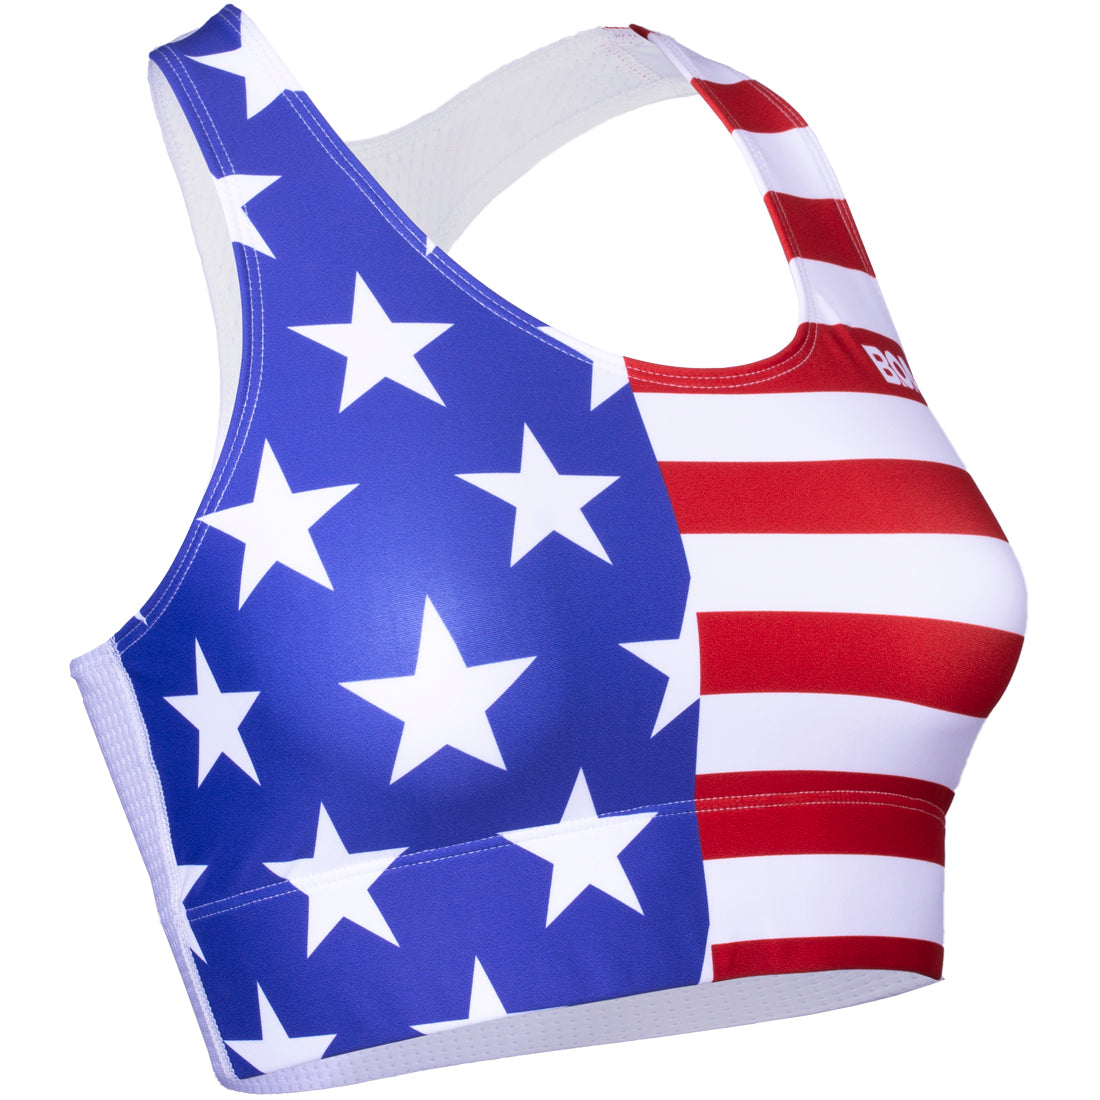 Patriotic American flag sports bra for team USA